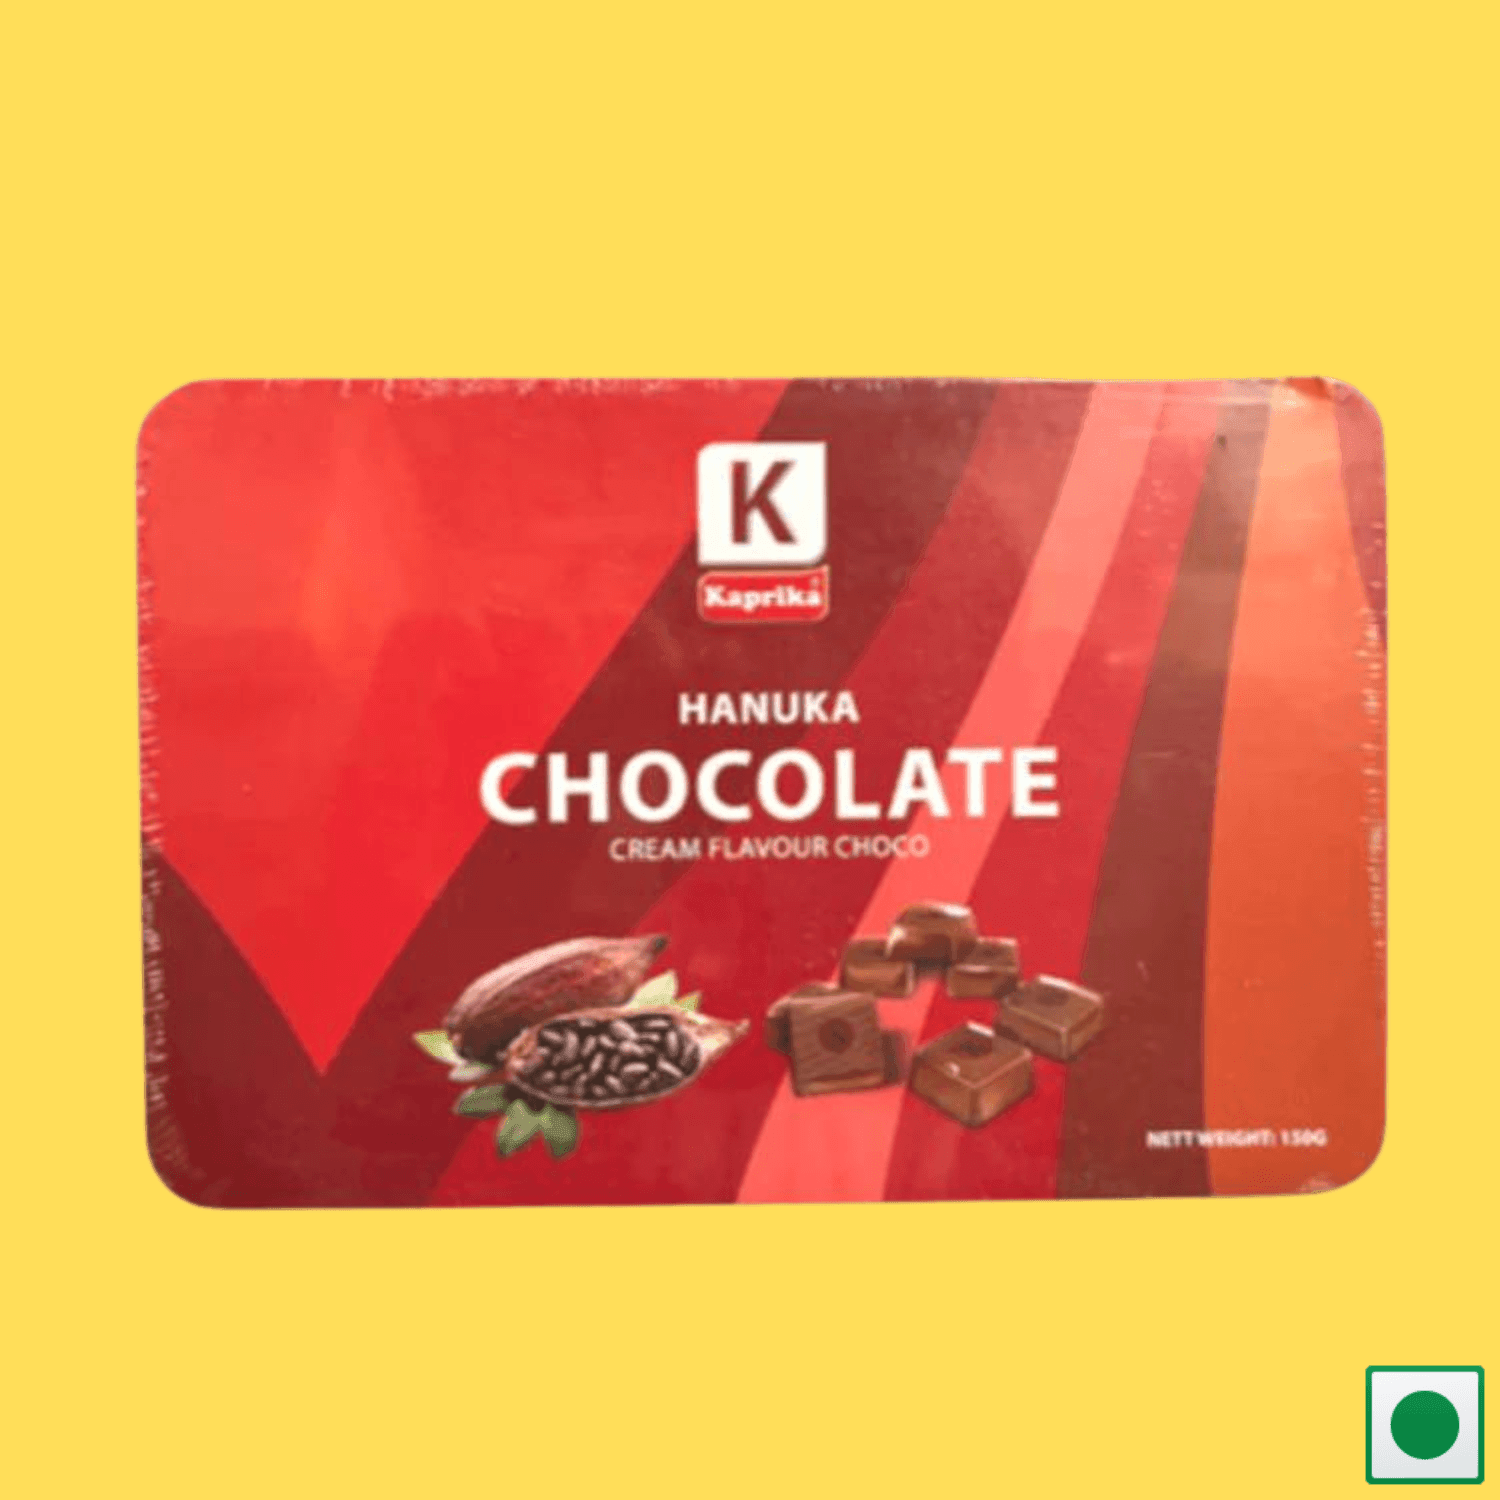 Kaprika Hanuka Exclusive Chocolate Nuts Gift Pack, 150g - Super 7 Mart